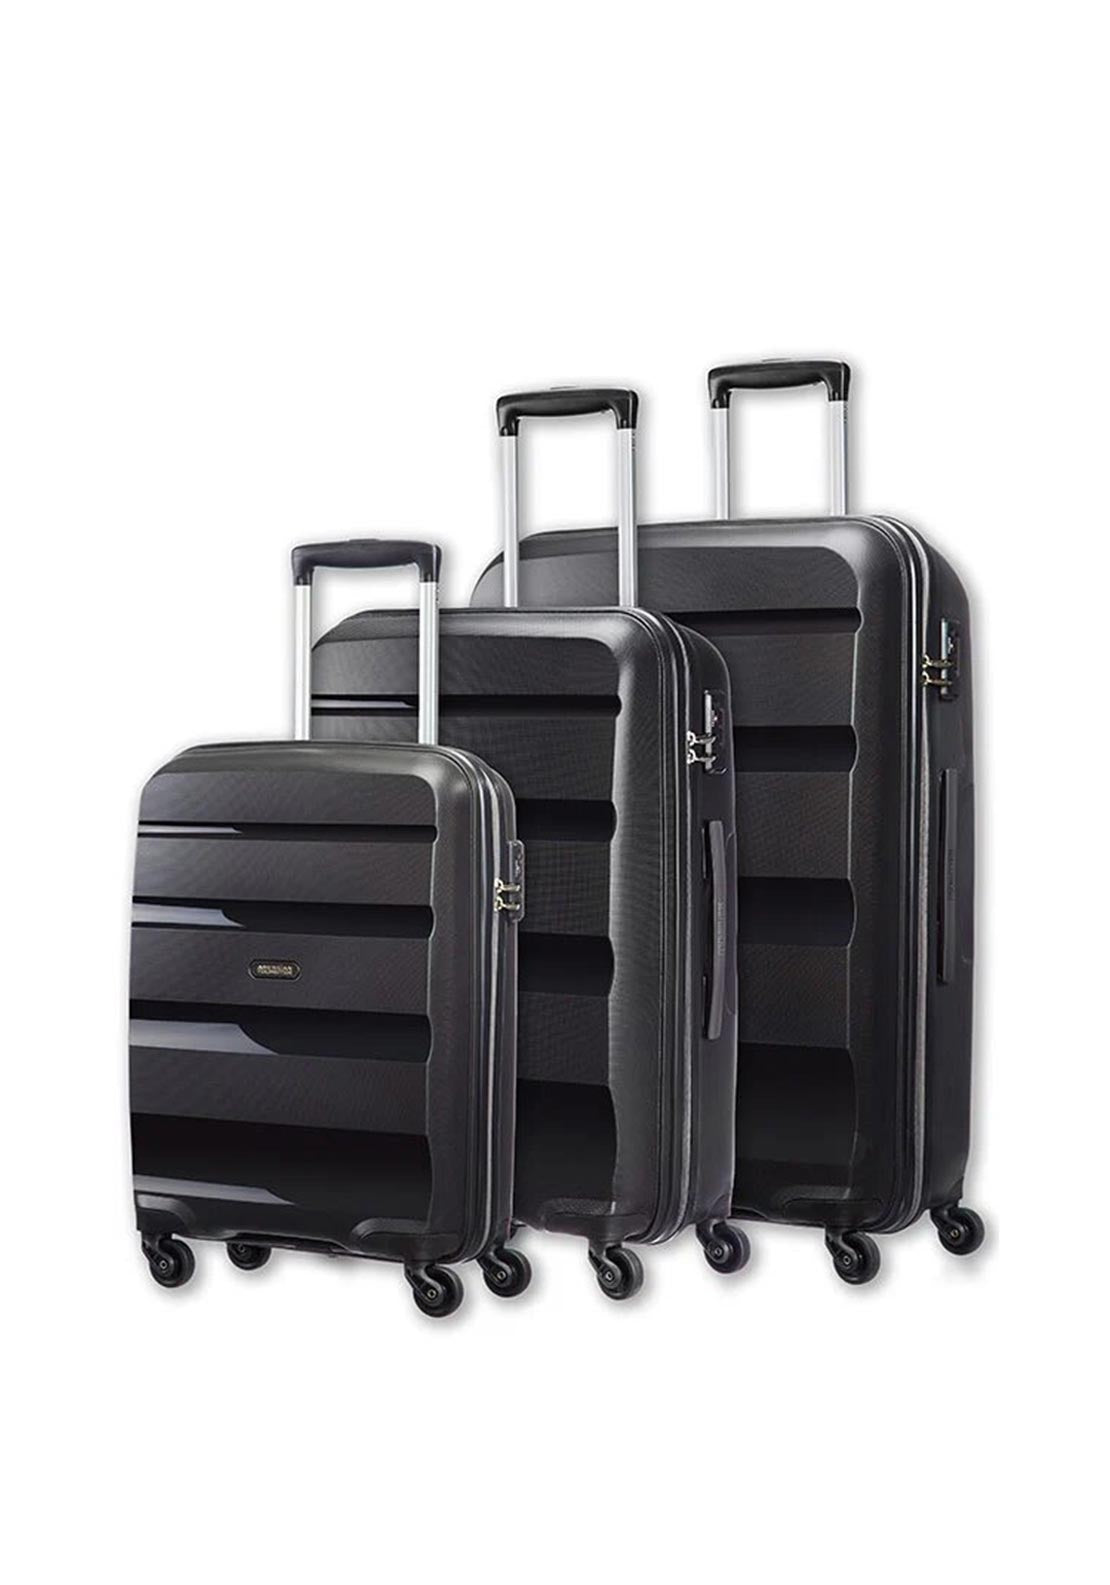 American Tourister Bon Air Luggage Set, Black - McElhinneys